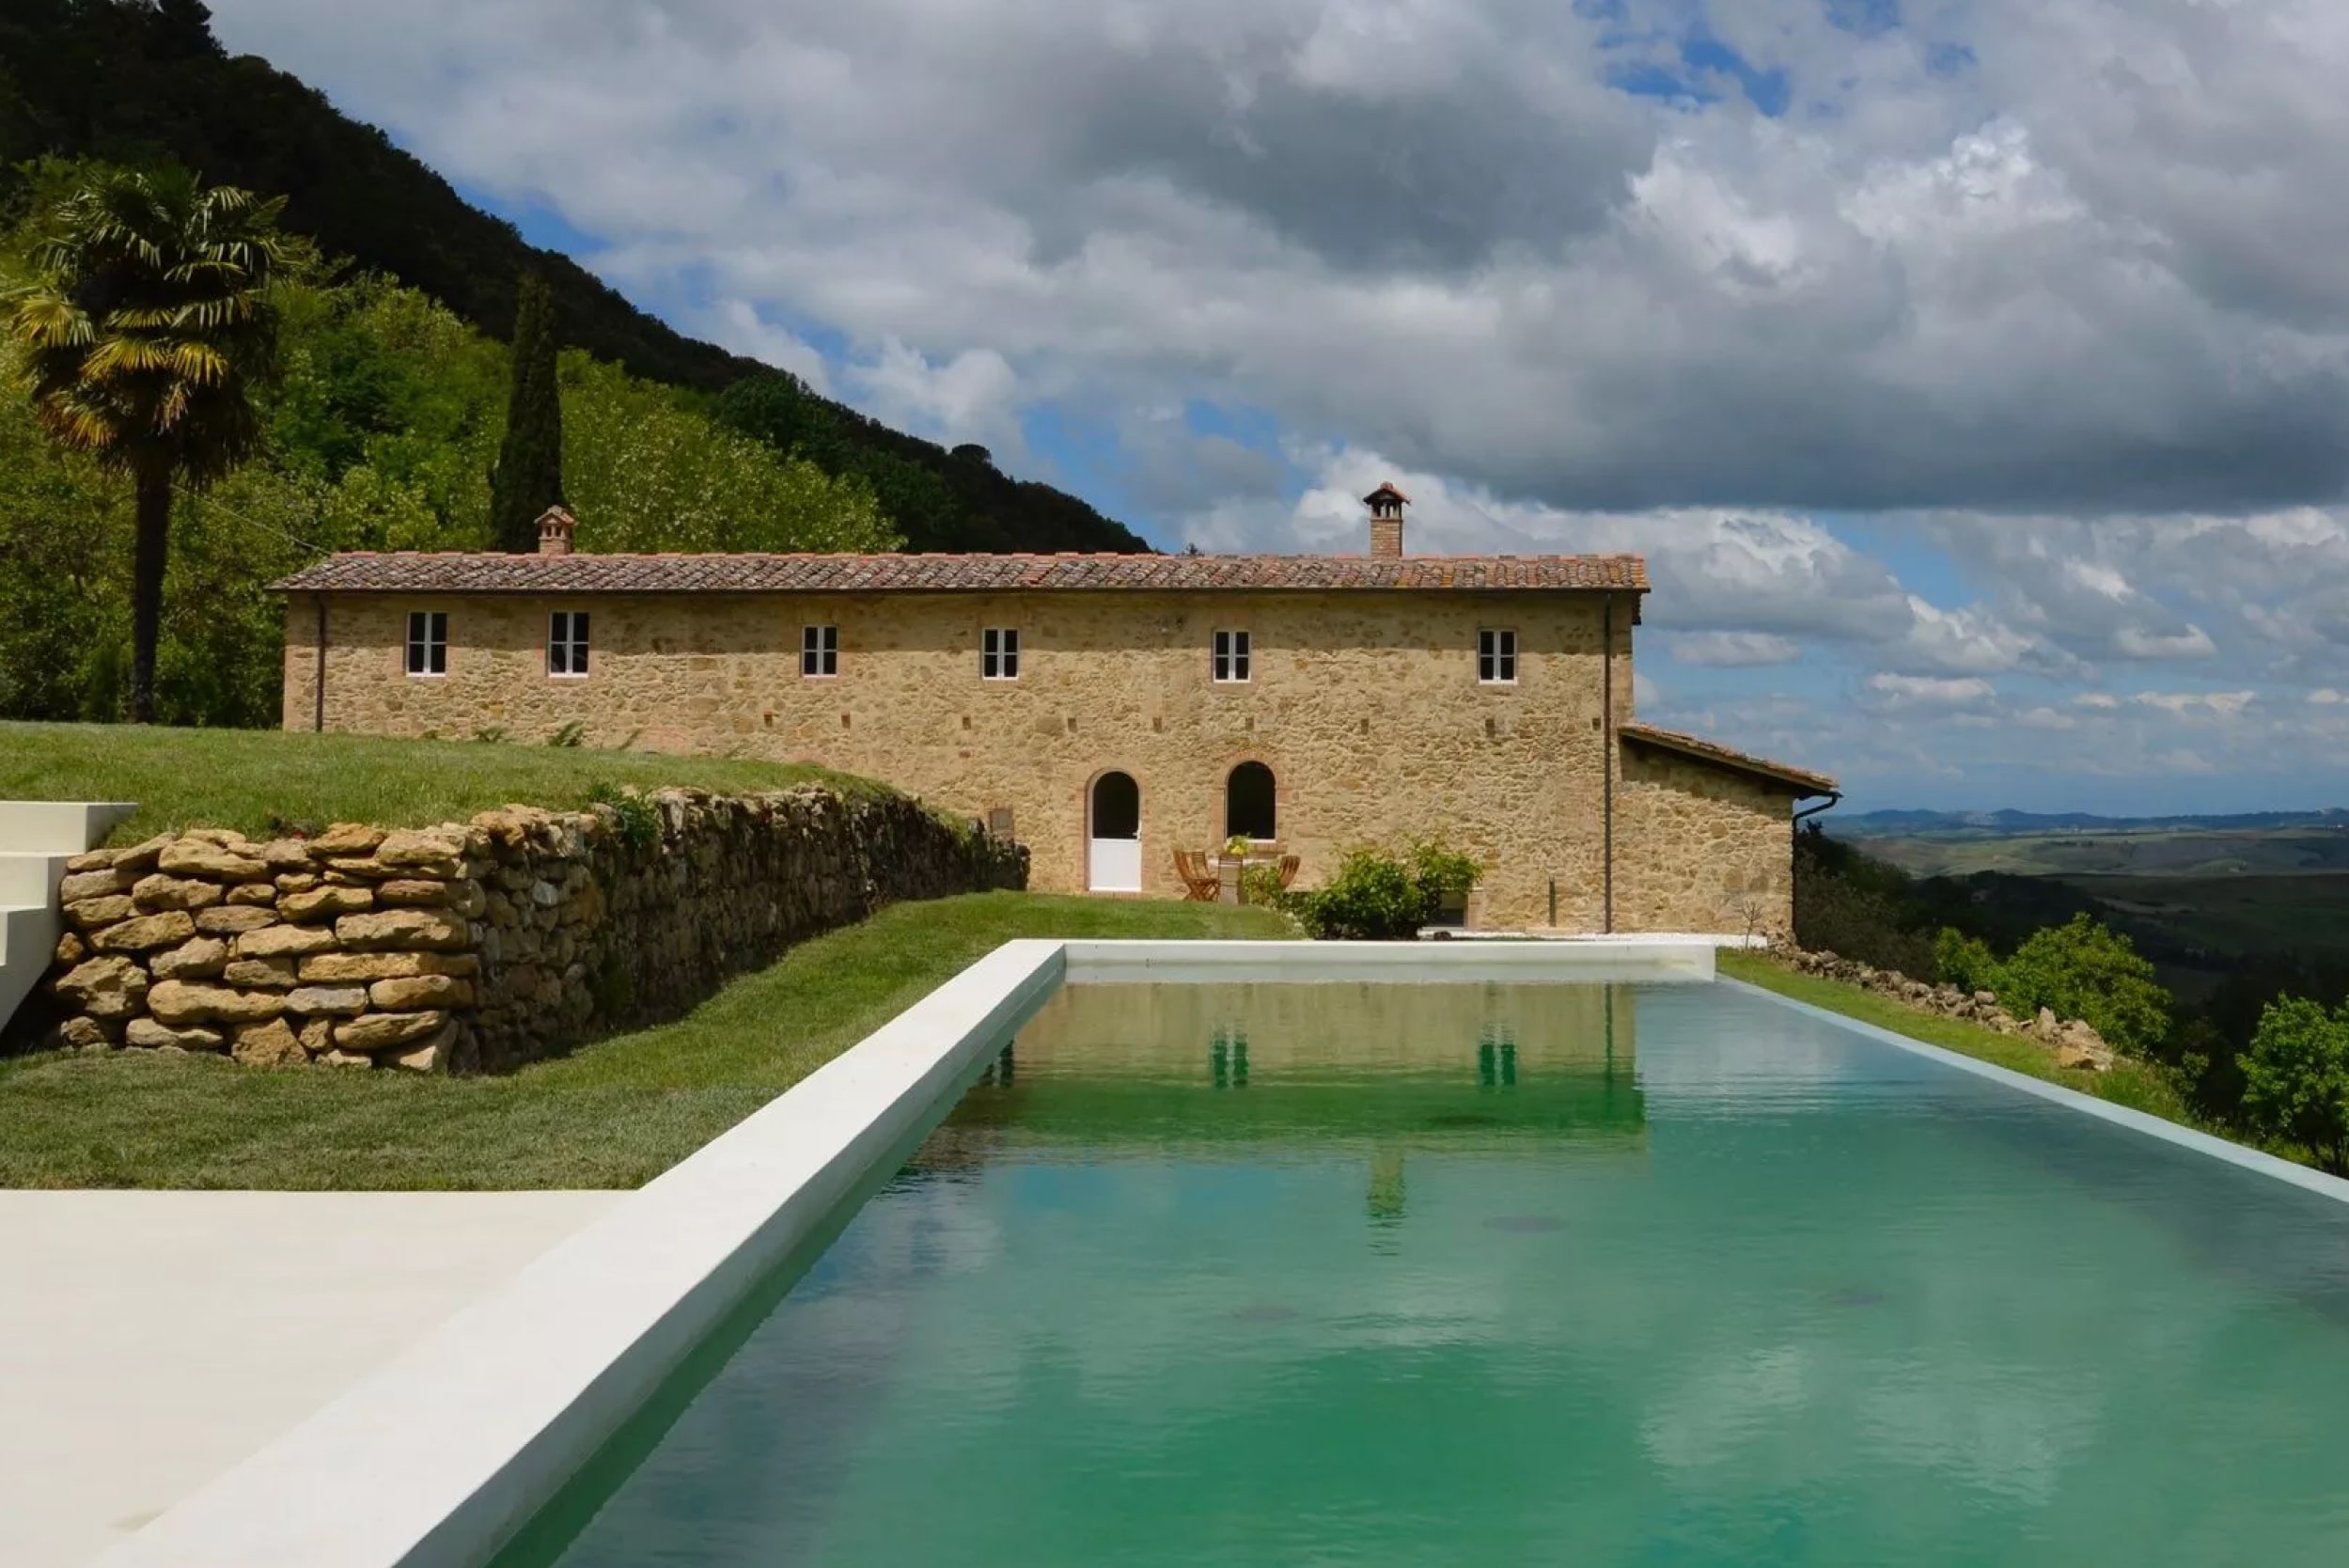 visit-italy-in-august-tuscany-villa-girolamo-min